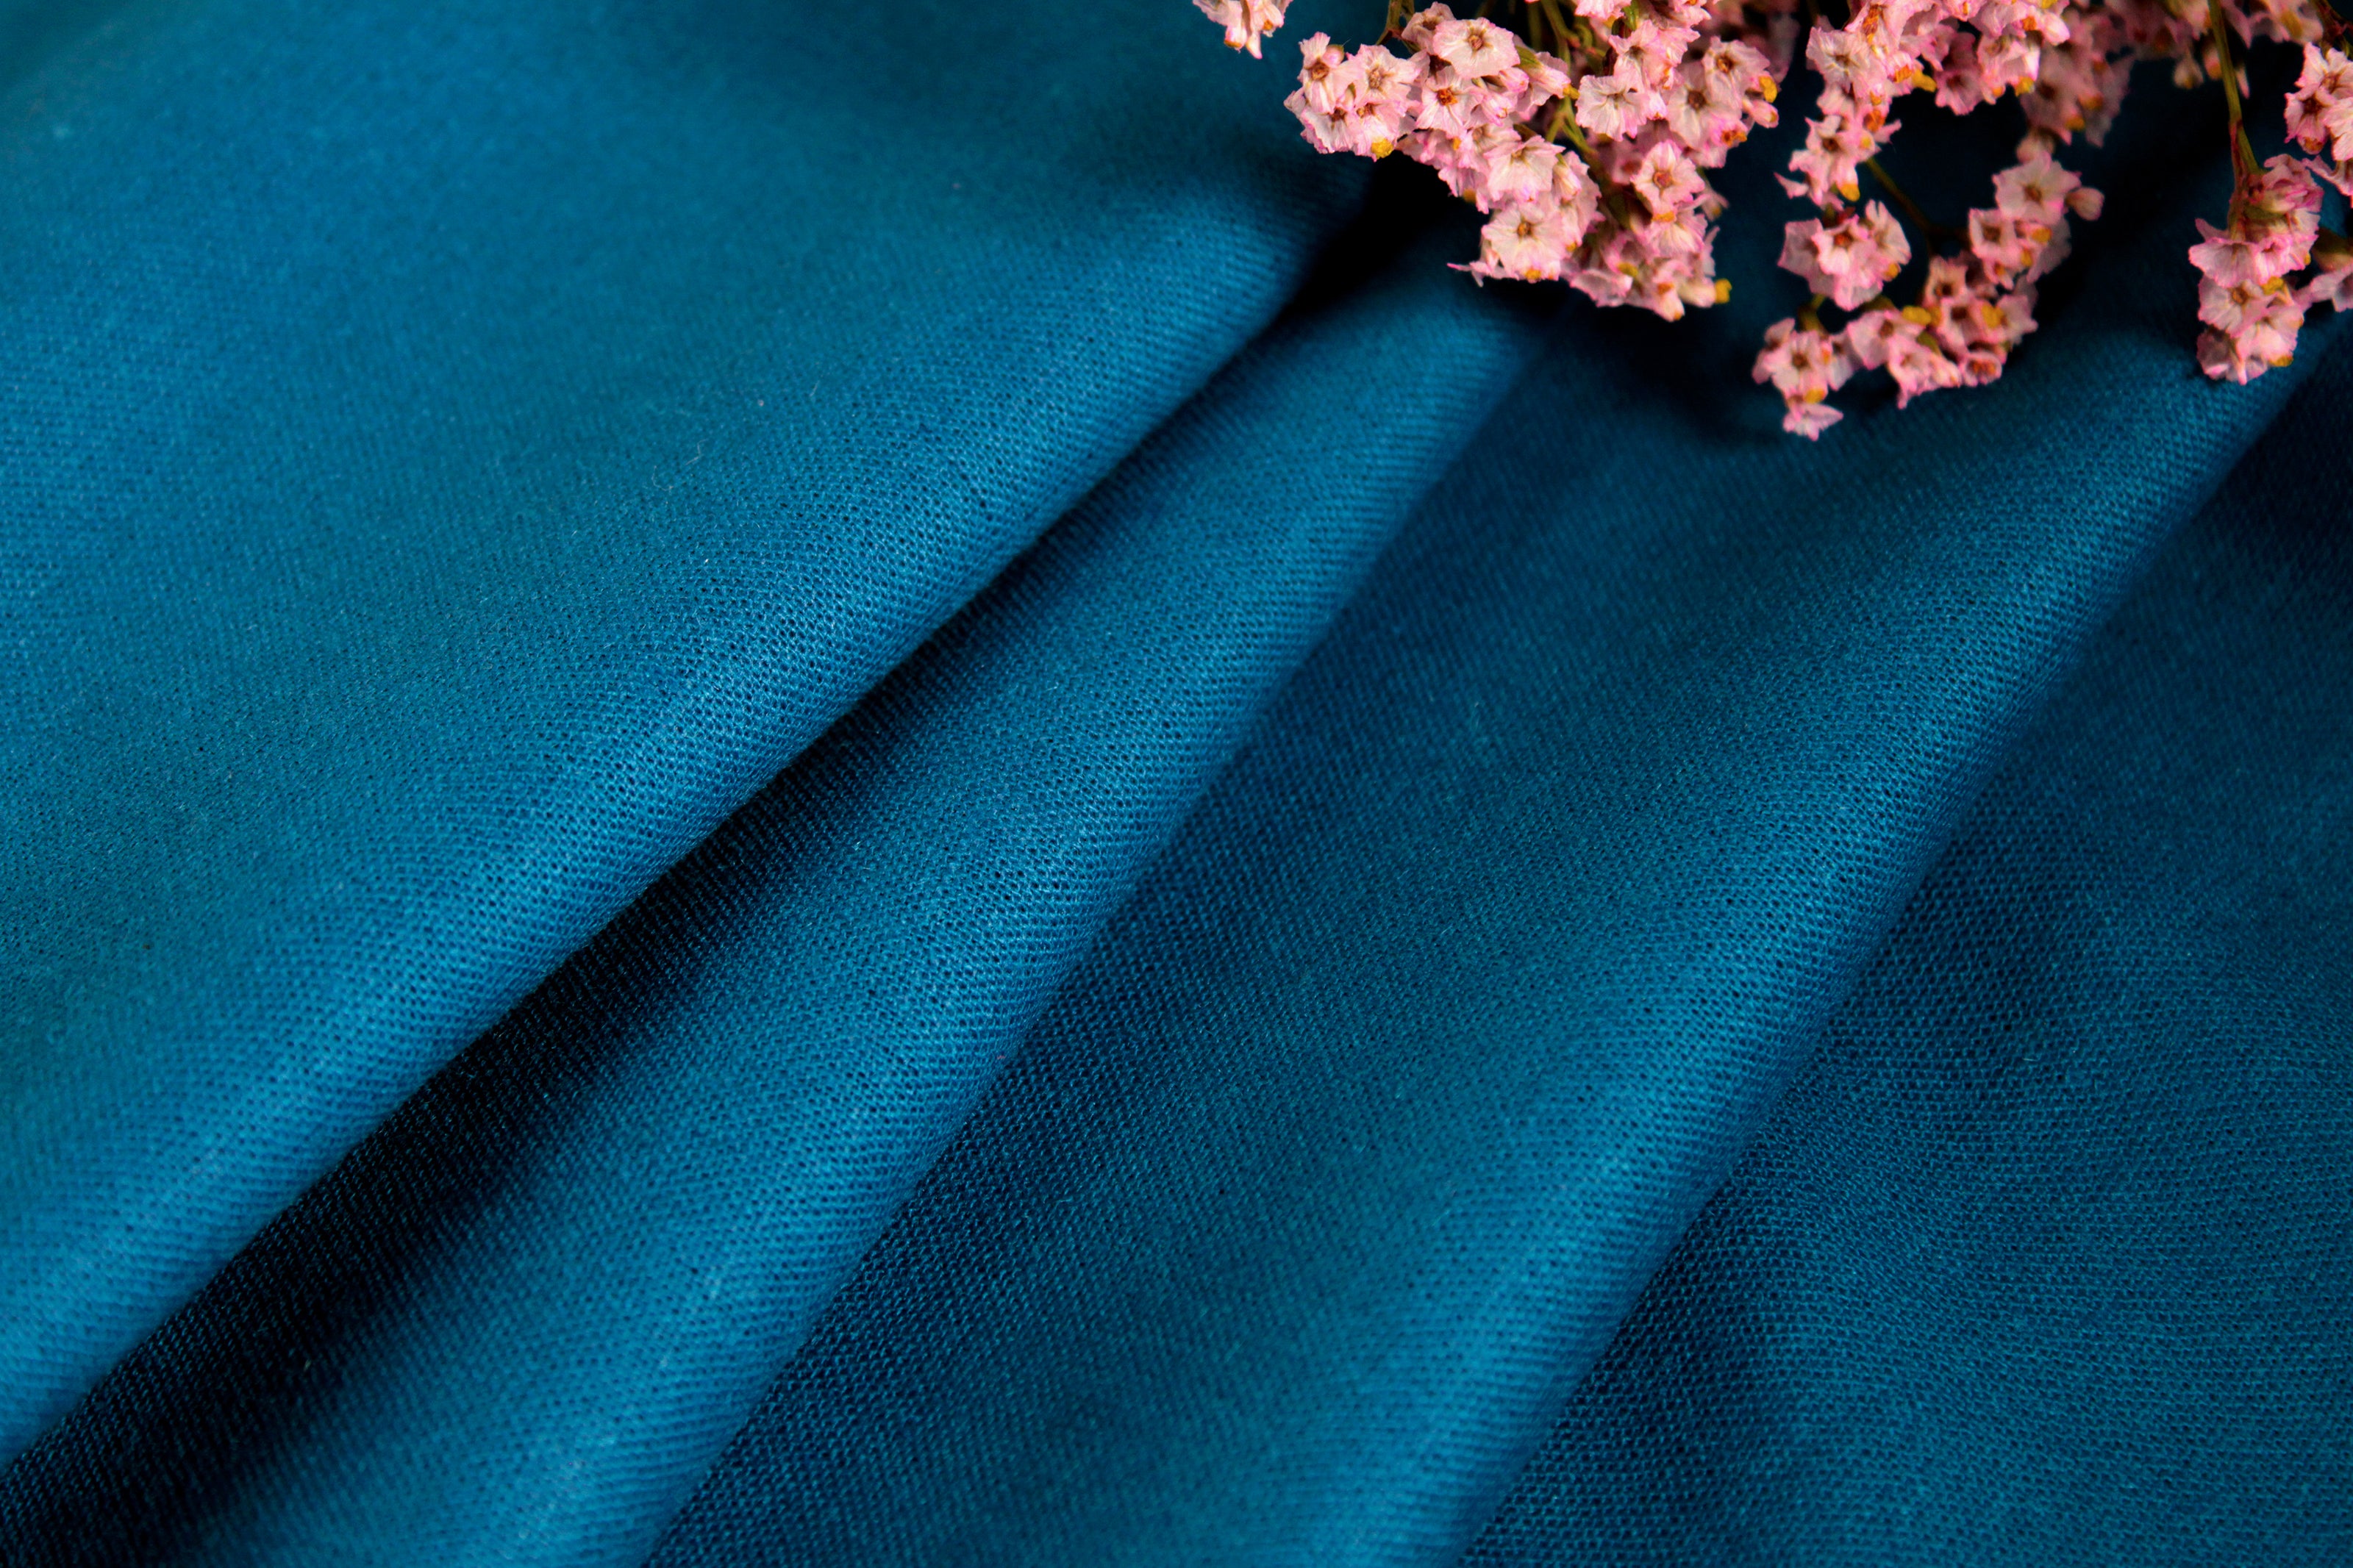 WHOLESALE Linen Fabric USA / Linen Fabric ROLL Wholesale / Linen by the Bolt / Classic blue linen fabric